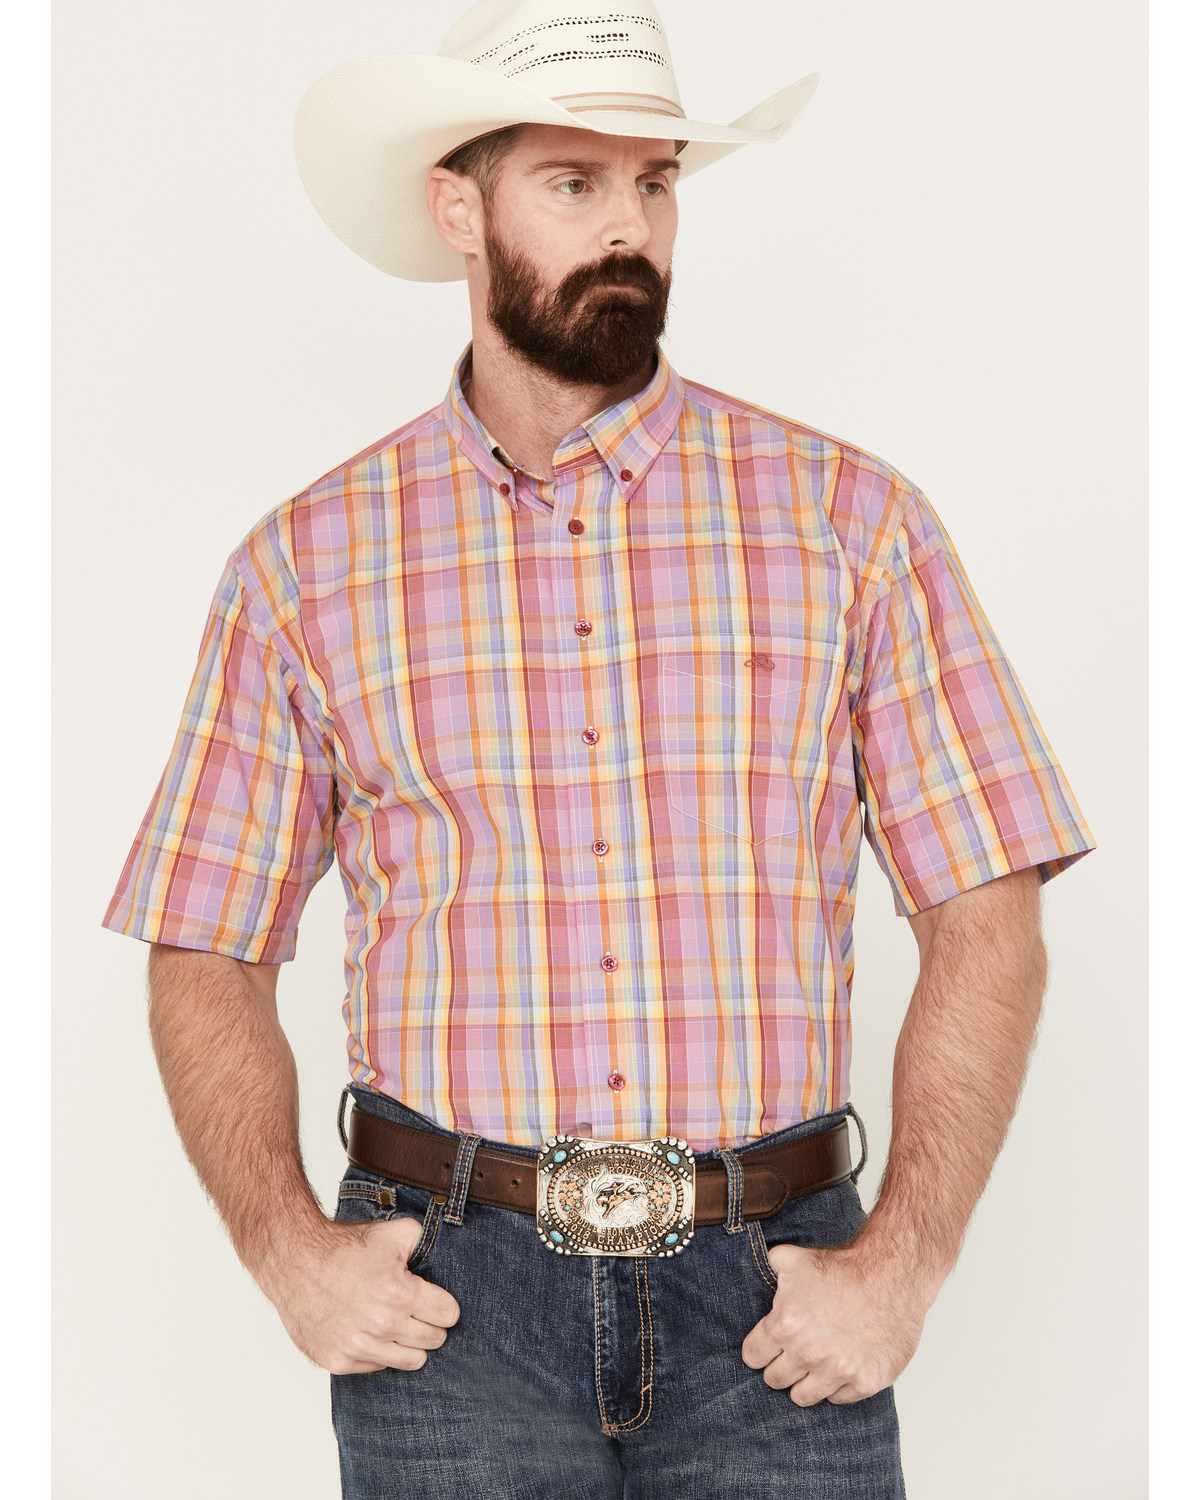 Resistol Men's Panama Plaid Print Short Sleeve Button Down Western Shirt